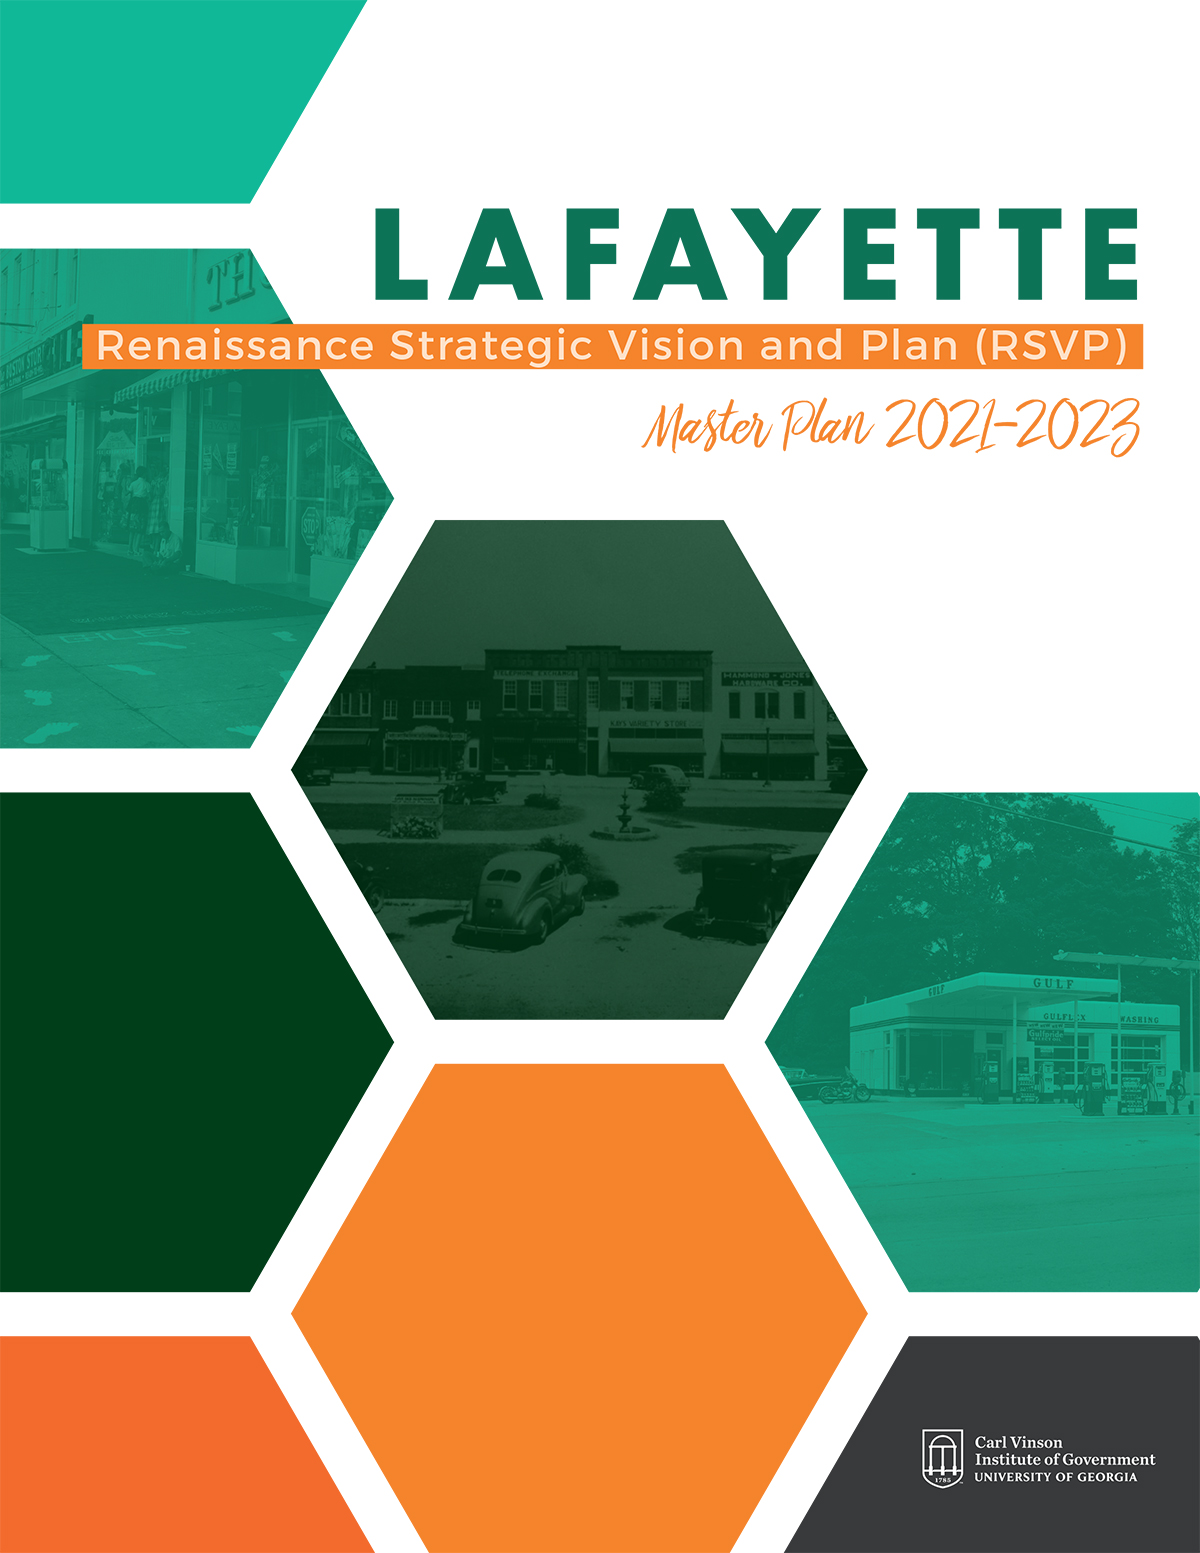 LaFayette lookbook cover